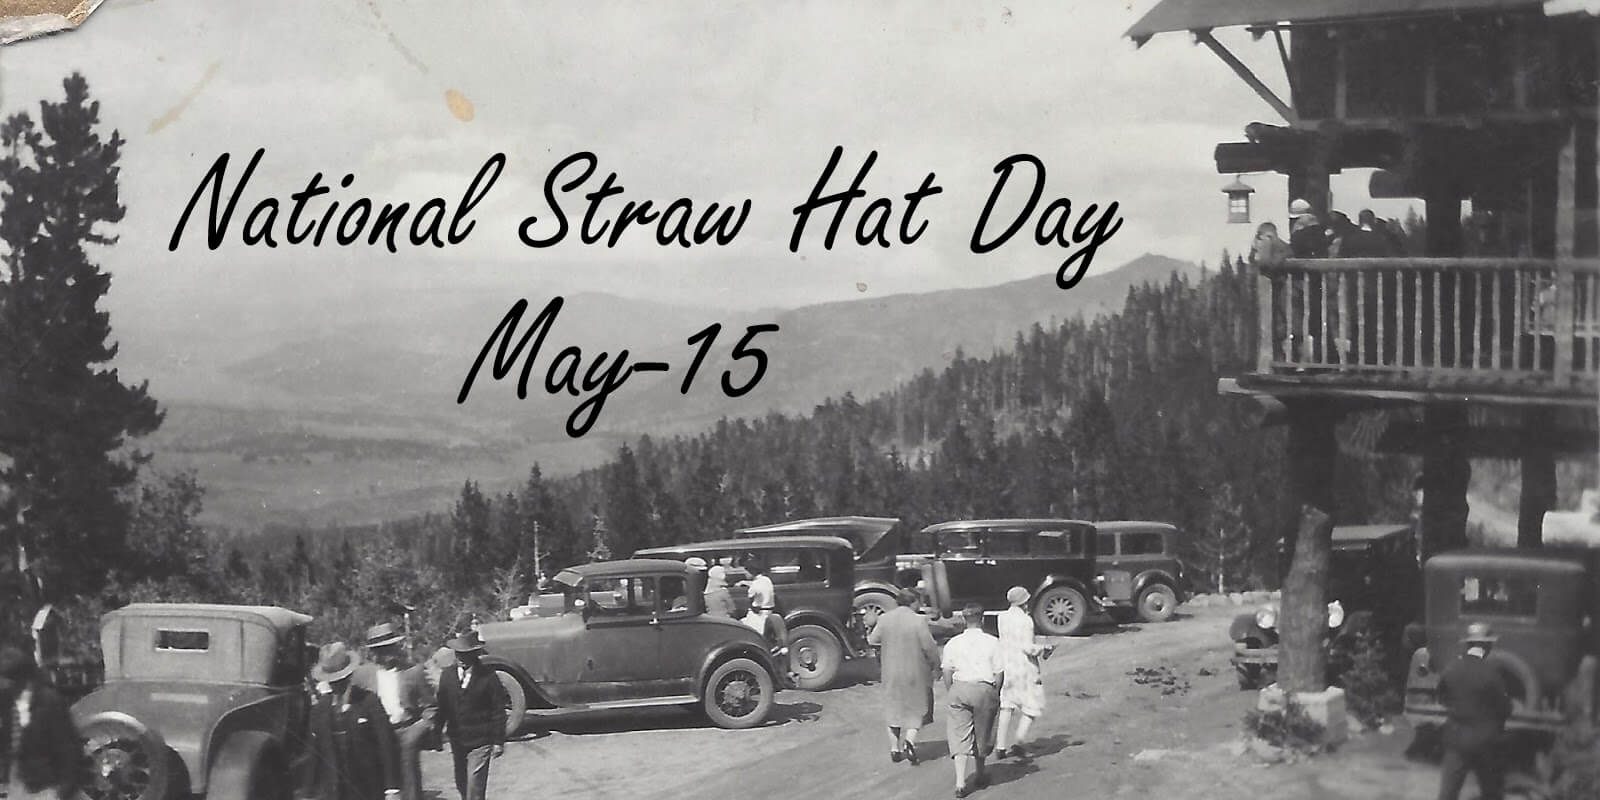 National Straw Hat Day